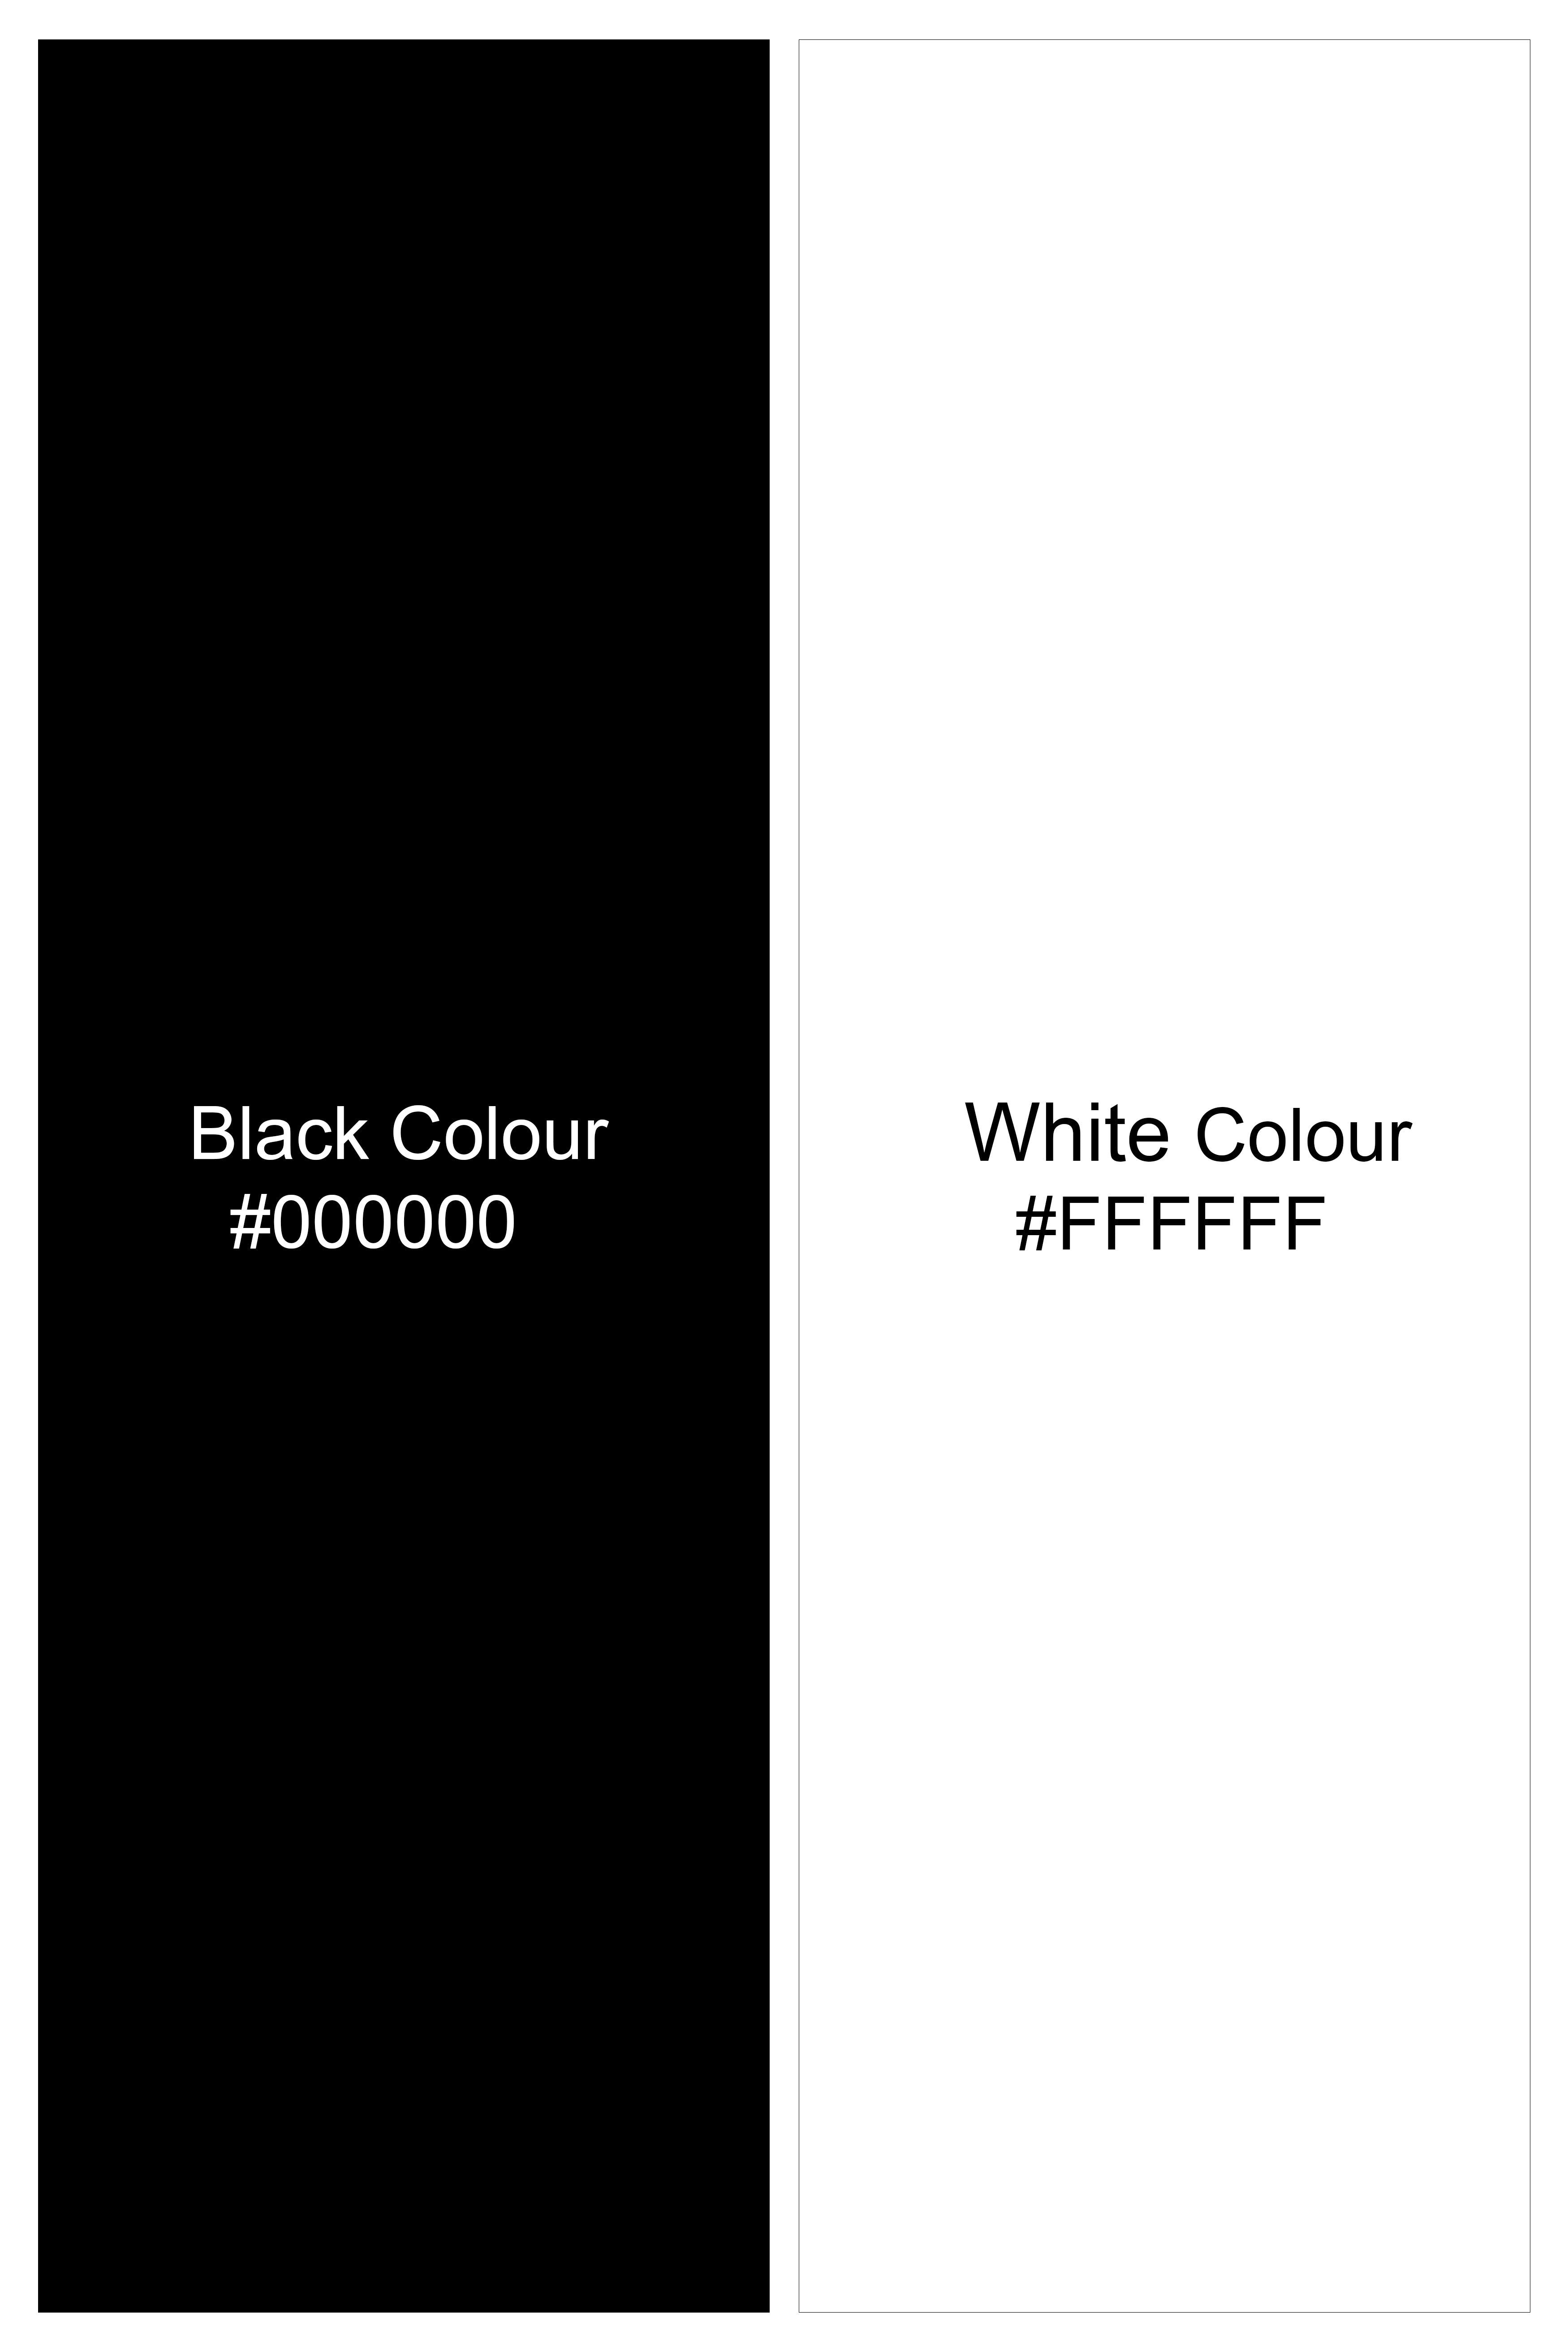 Half White Printed Half Solid Black Royal Oxford Designer Shirt